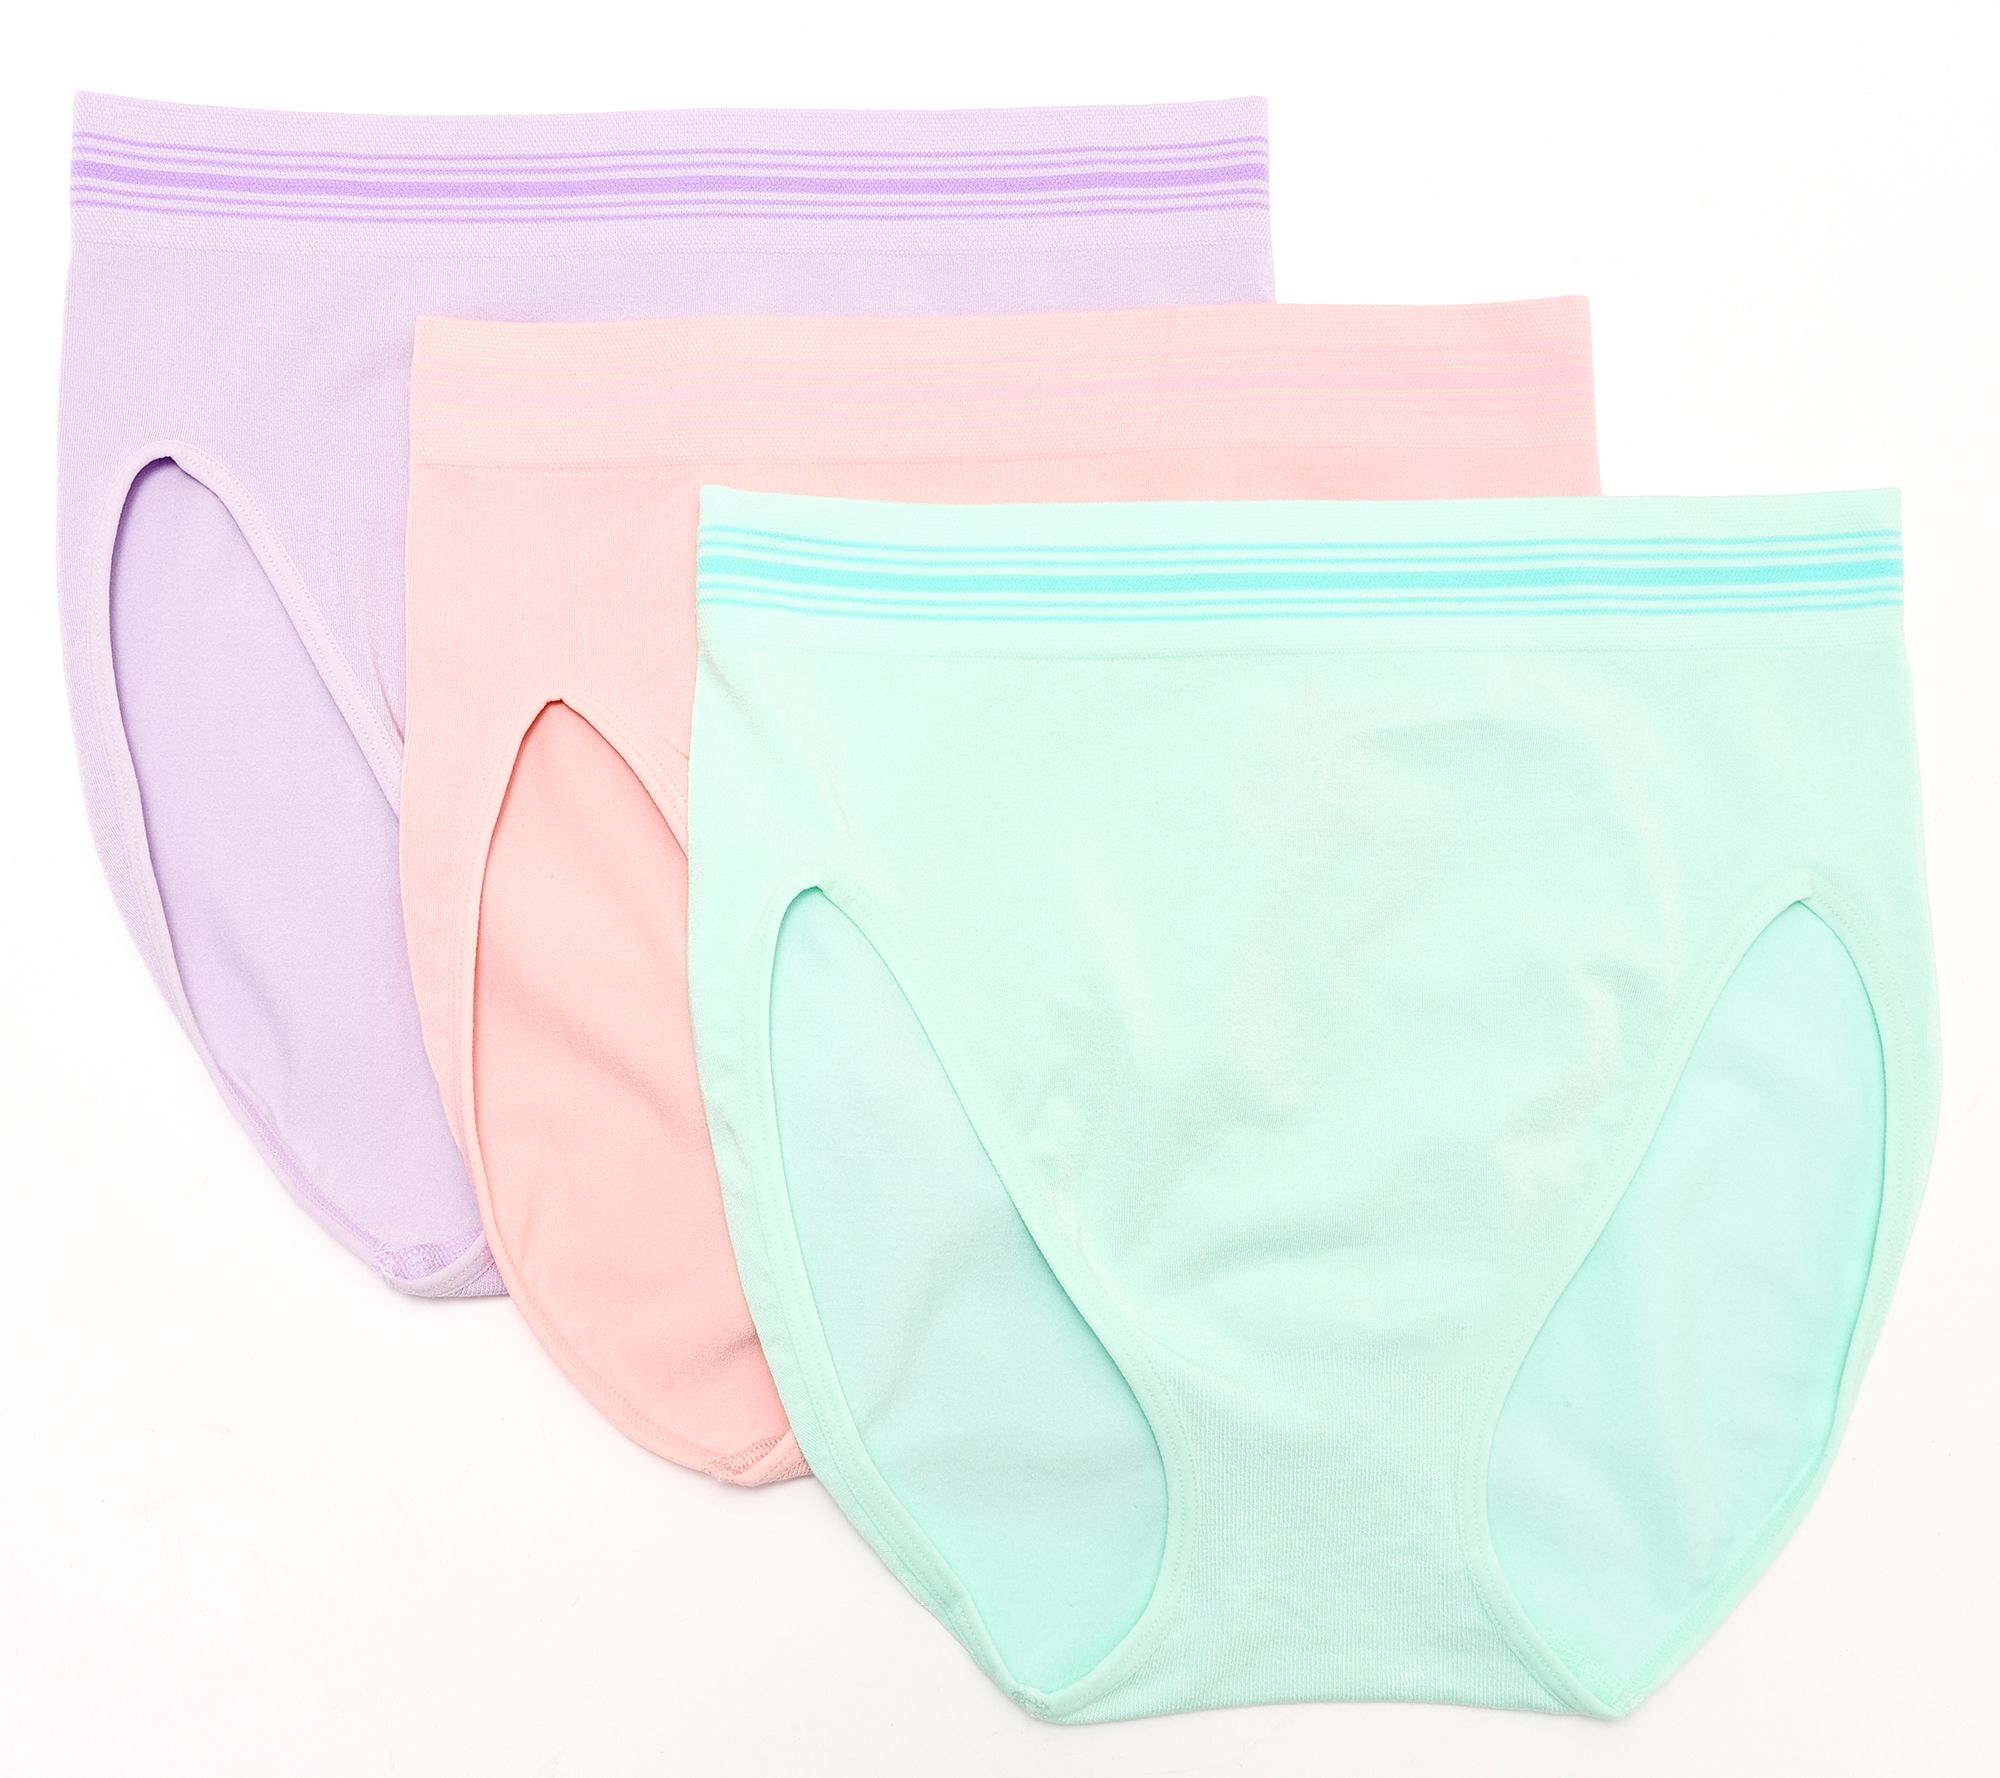 Breezies, Intimates & Sleepwear, S Breezies Set Of 4 Nylon Microfiber  Hicut Panty Sterling Womens Size Small